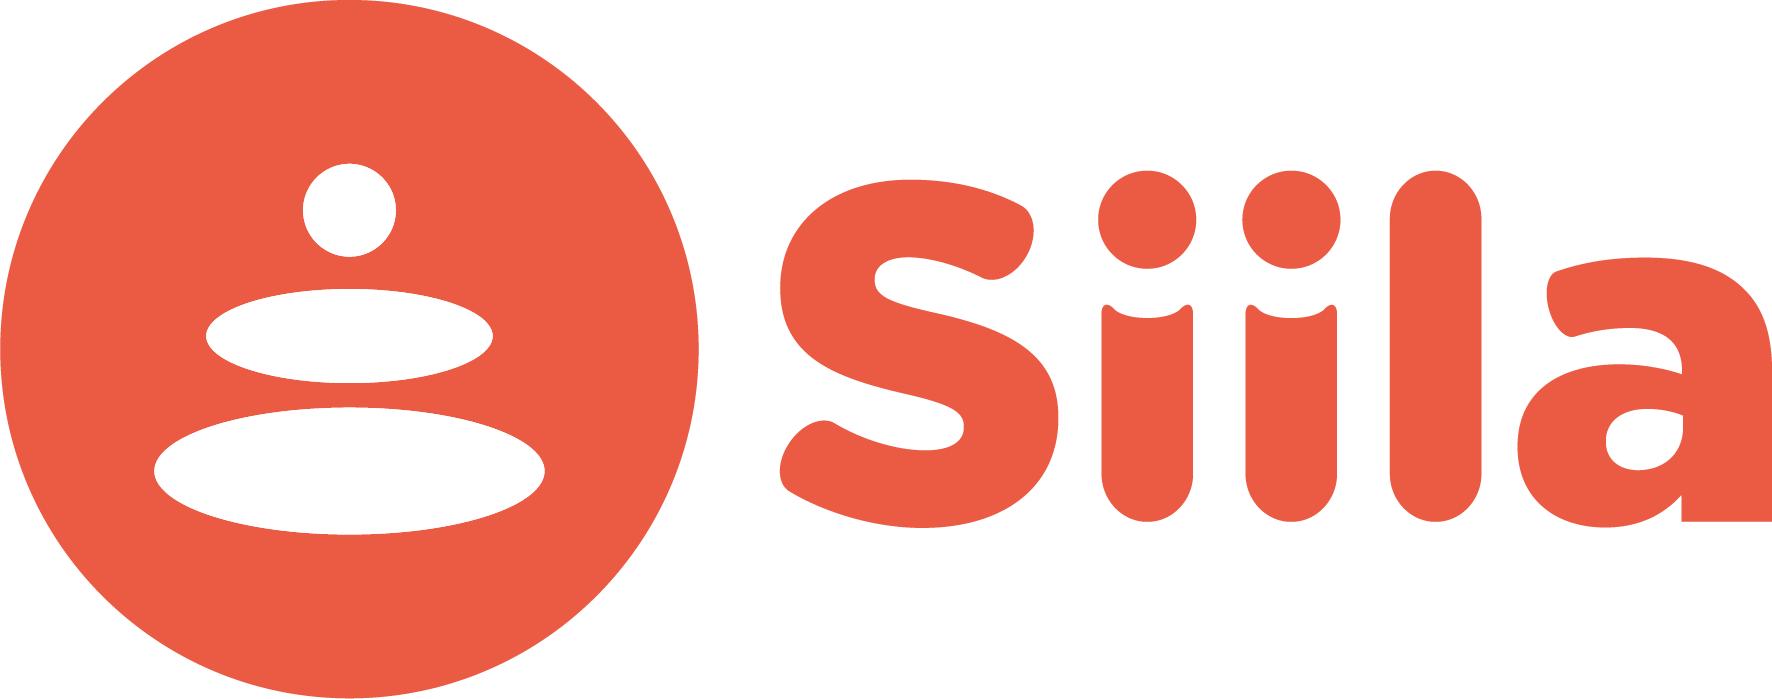 Siila Logo